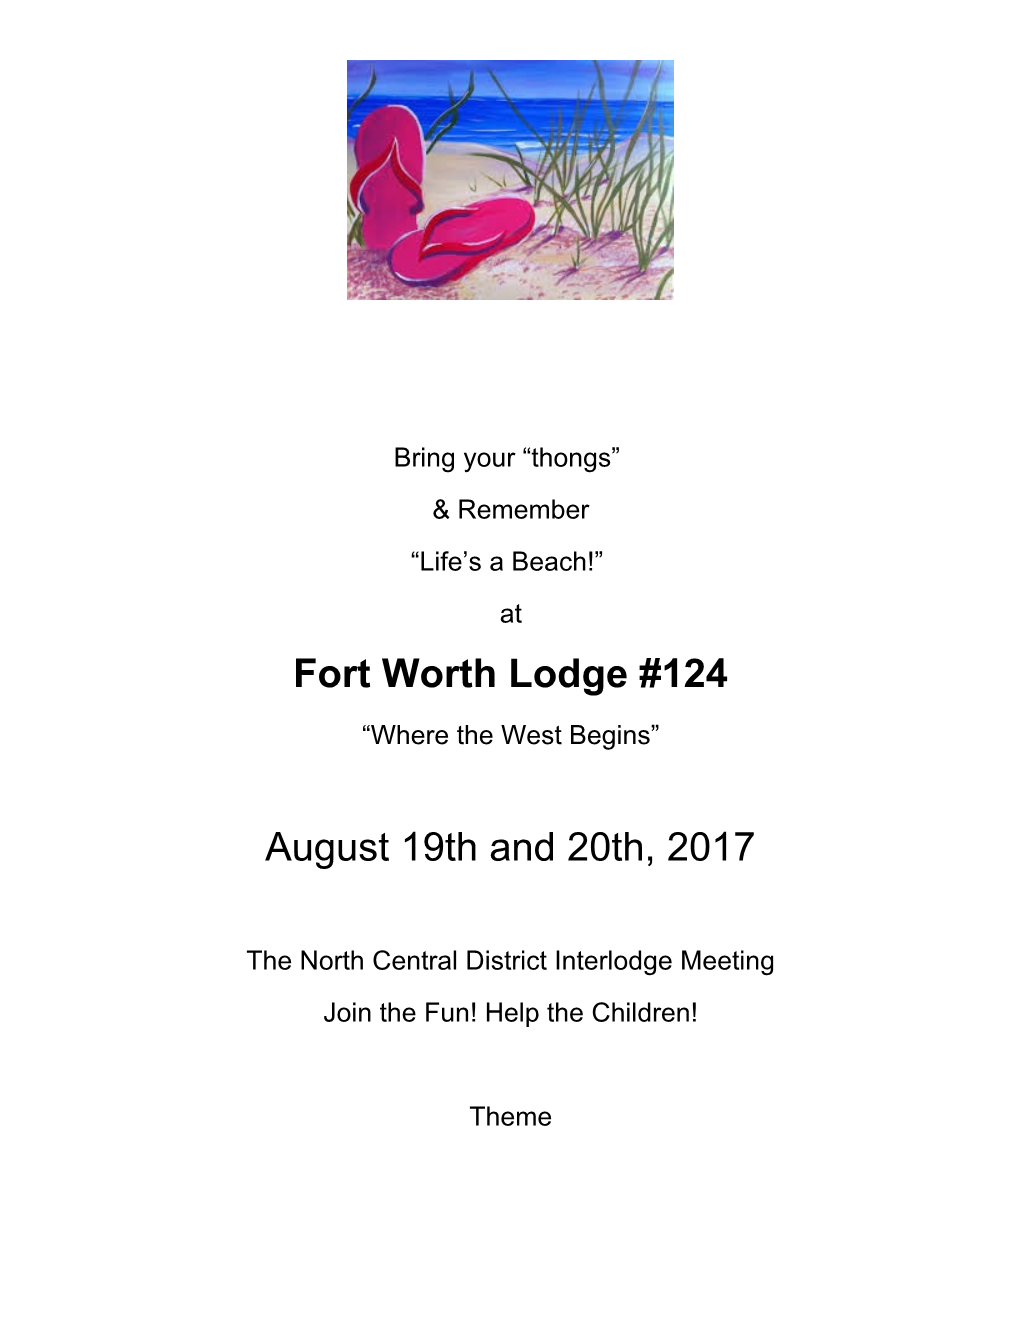 Fort Worth Lodge #124